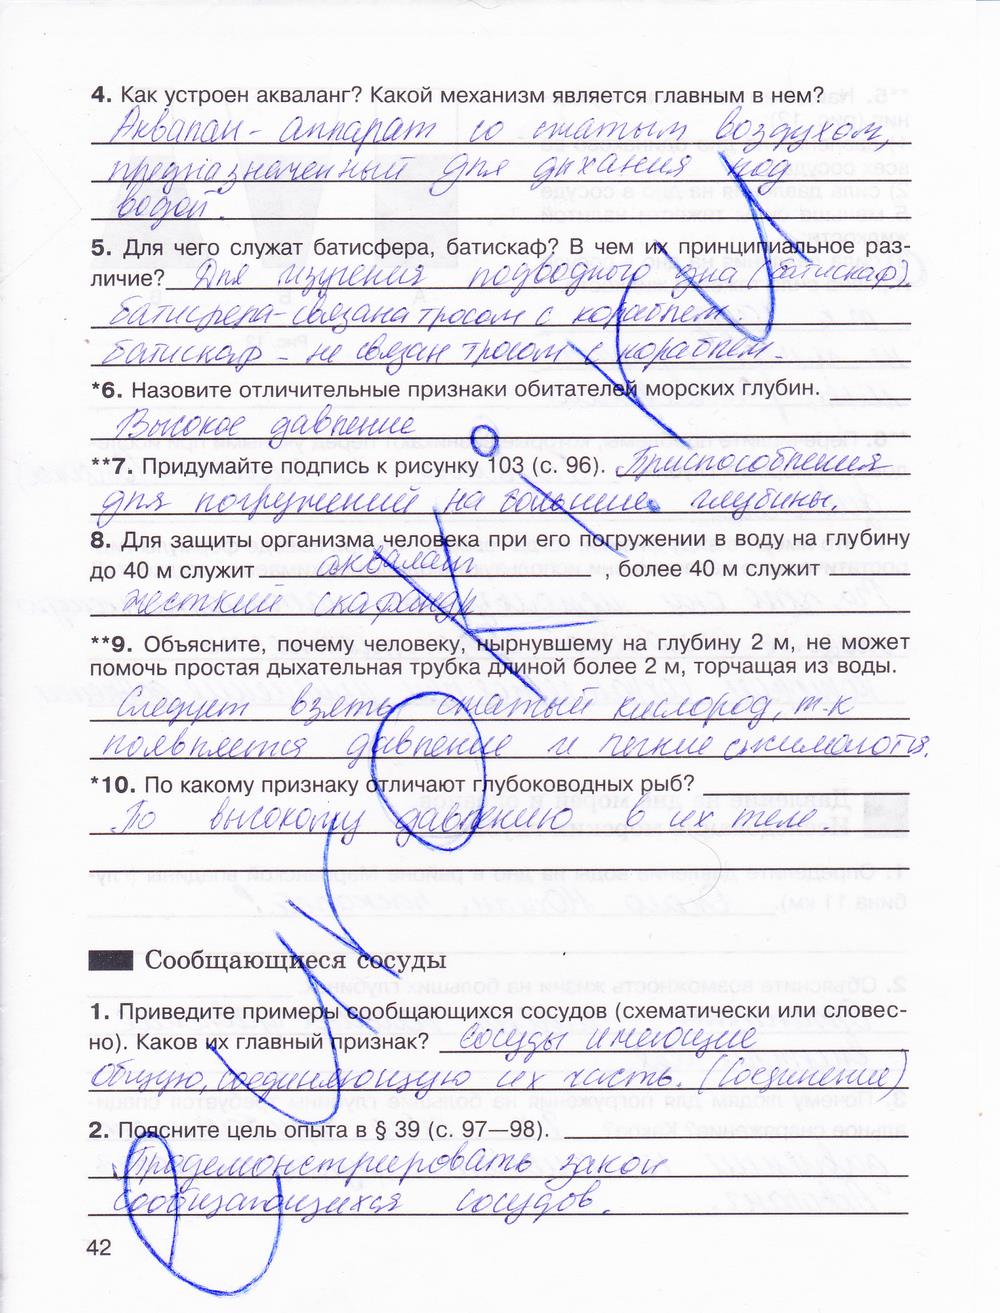 гдз 7 класс рабочая тетрадь страница 42 физика Мартынова, Бовин, Коротаев